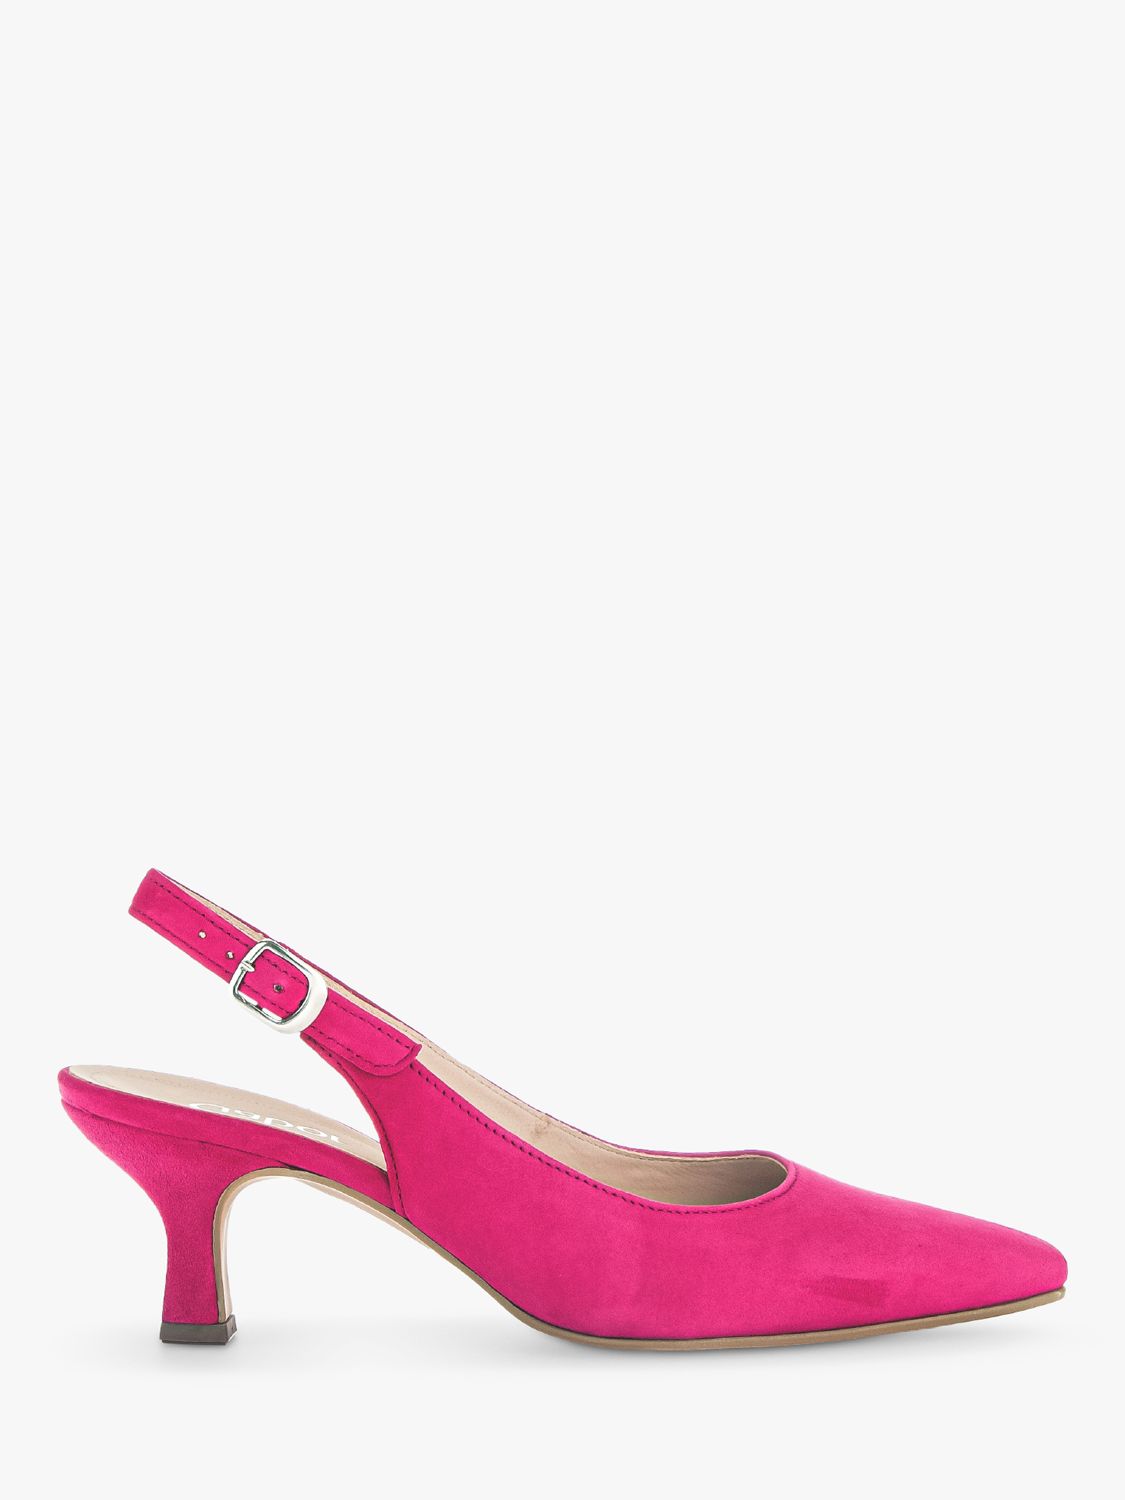 Gabor Lindy Slingback Kitten Heel Shoes, Pink at John Lewis & Partners